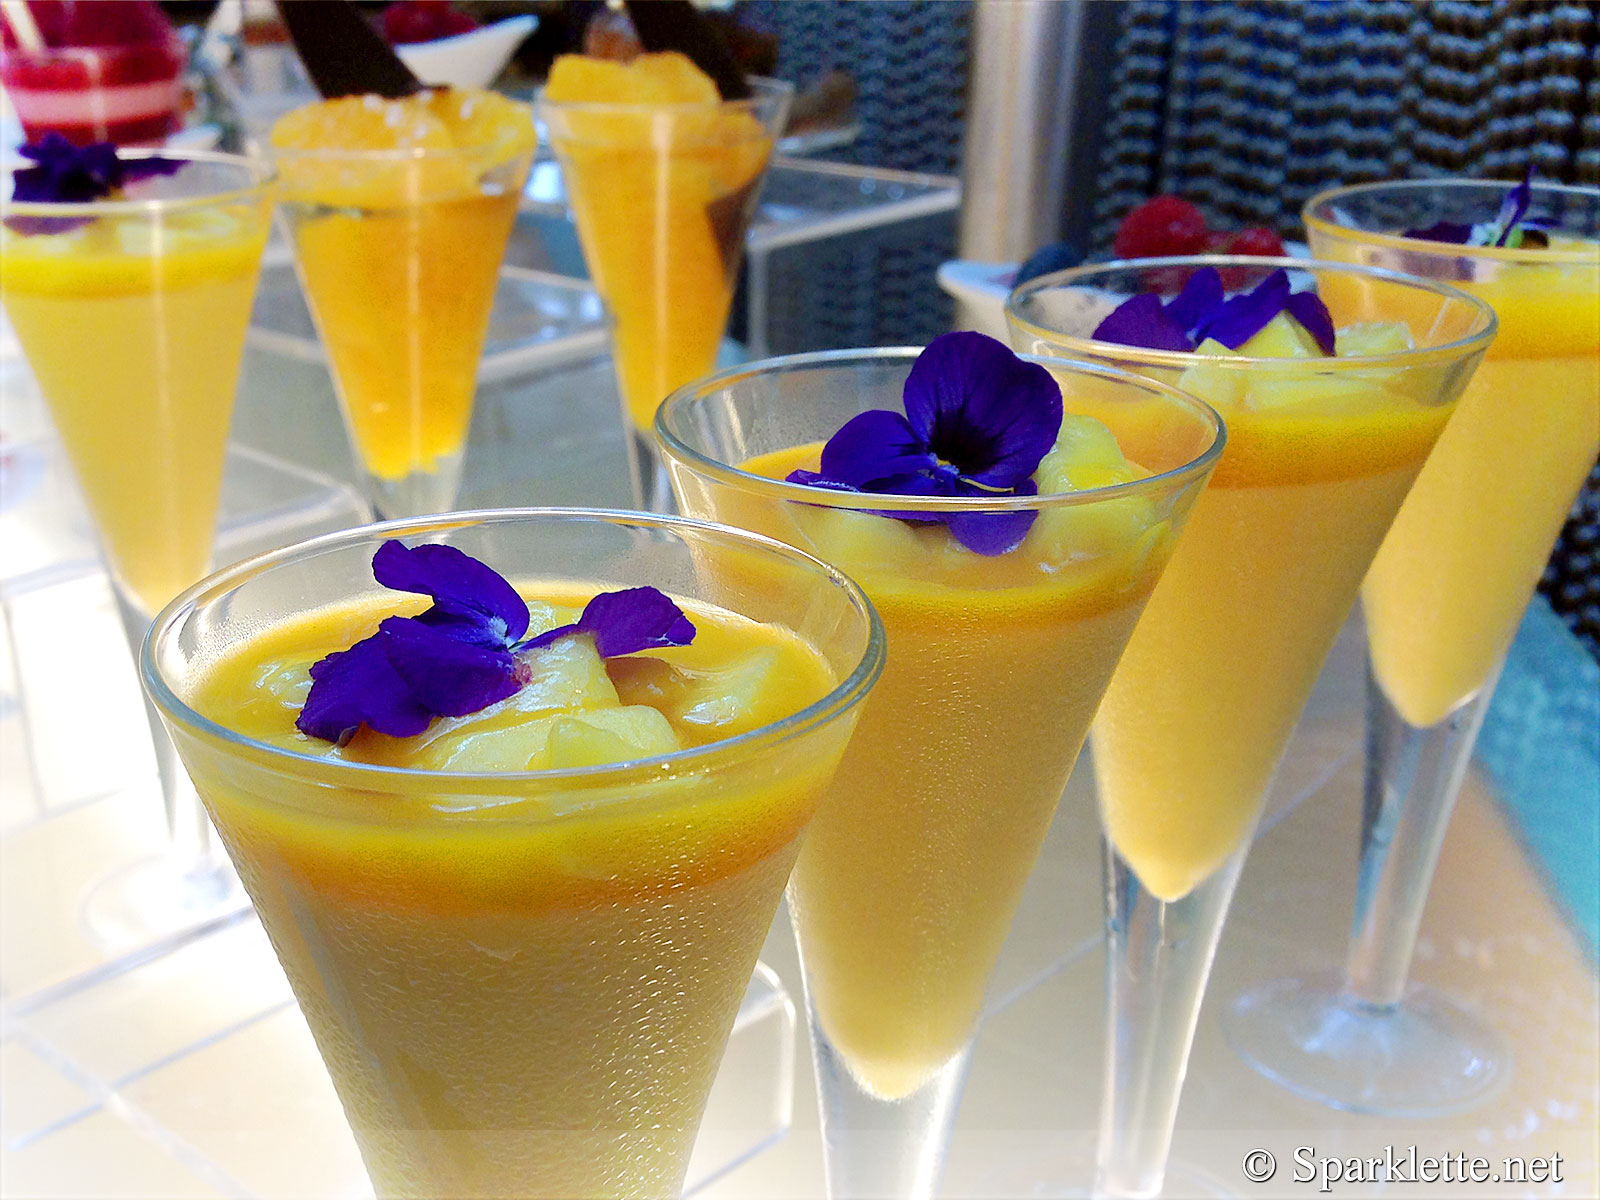 Truffle champagne brunch buffet at Greenhouse, The Ritz-Carlton, Millenia Singapore